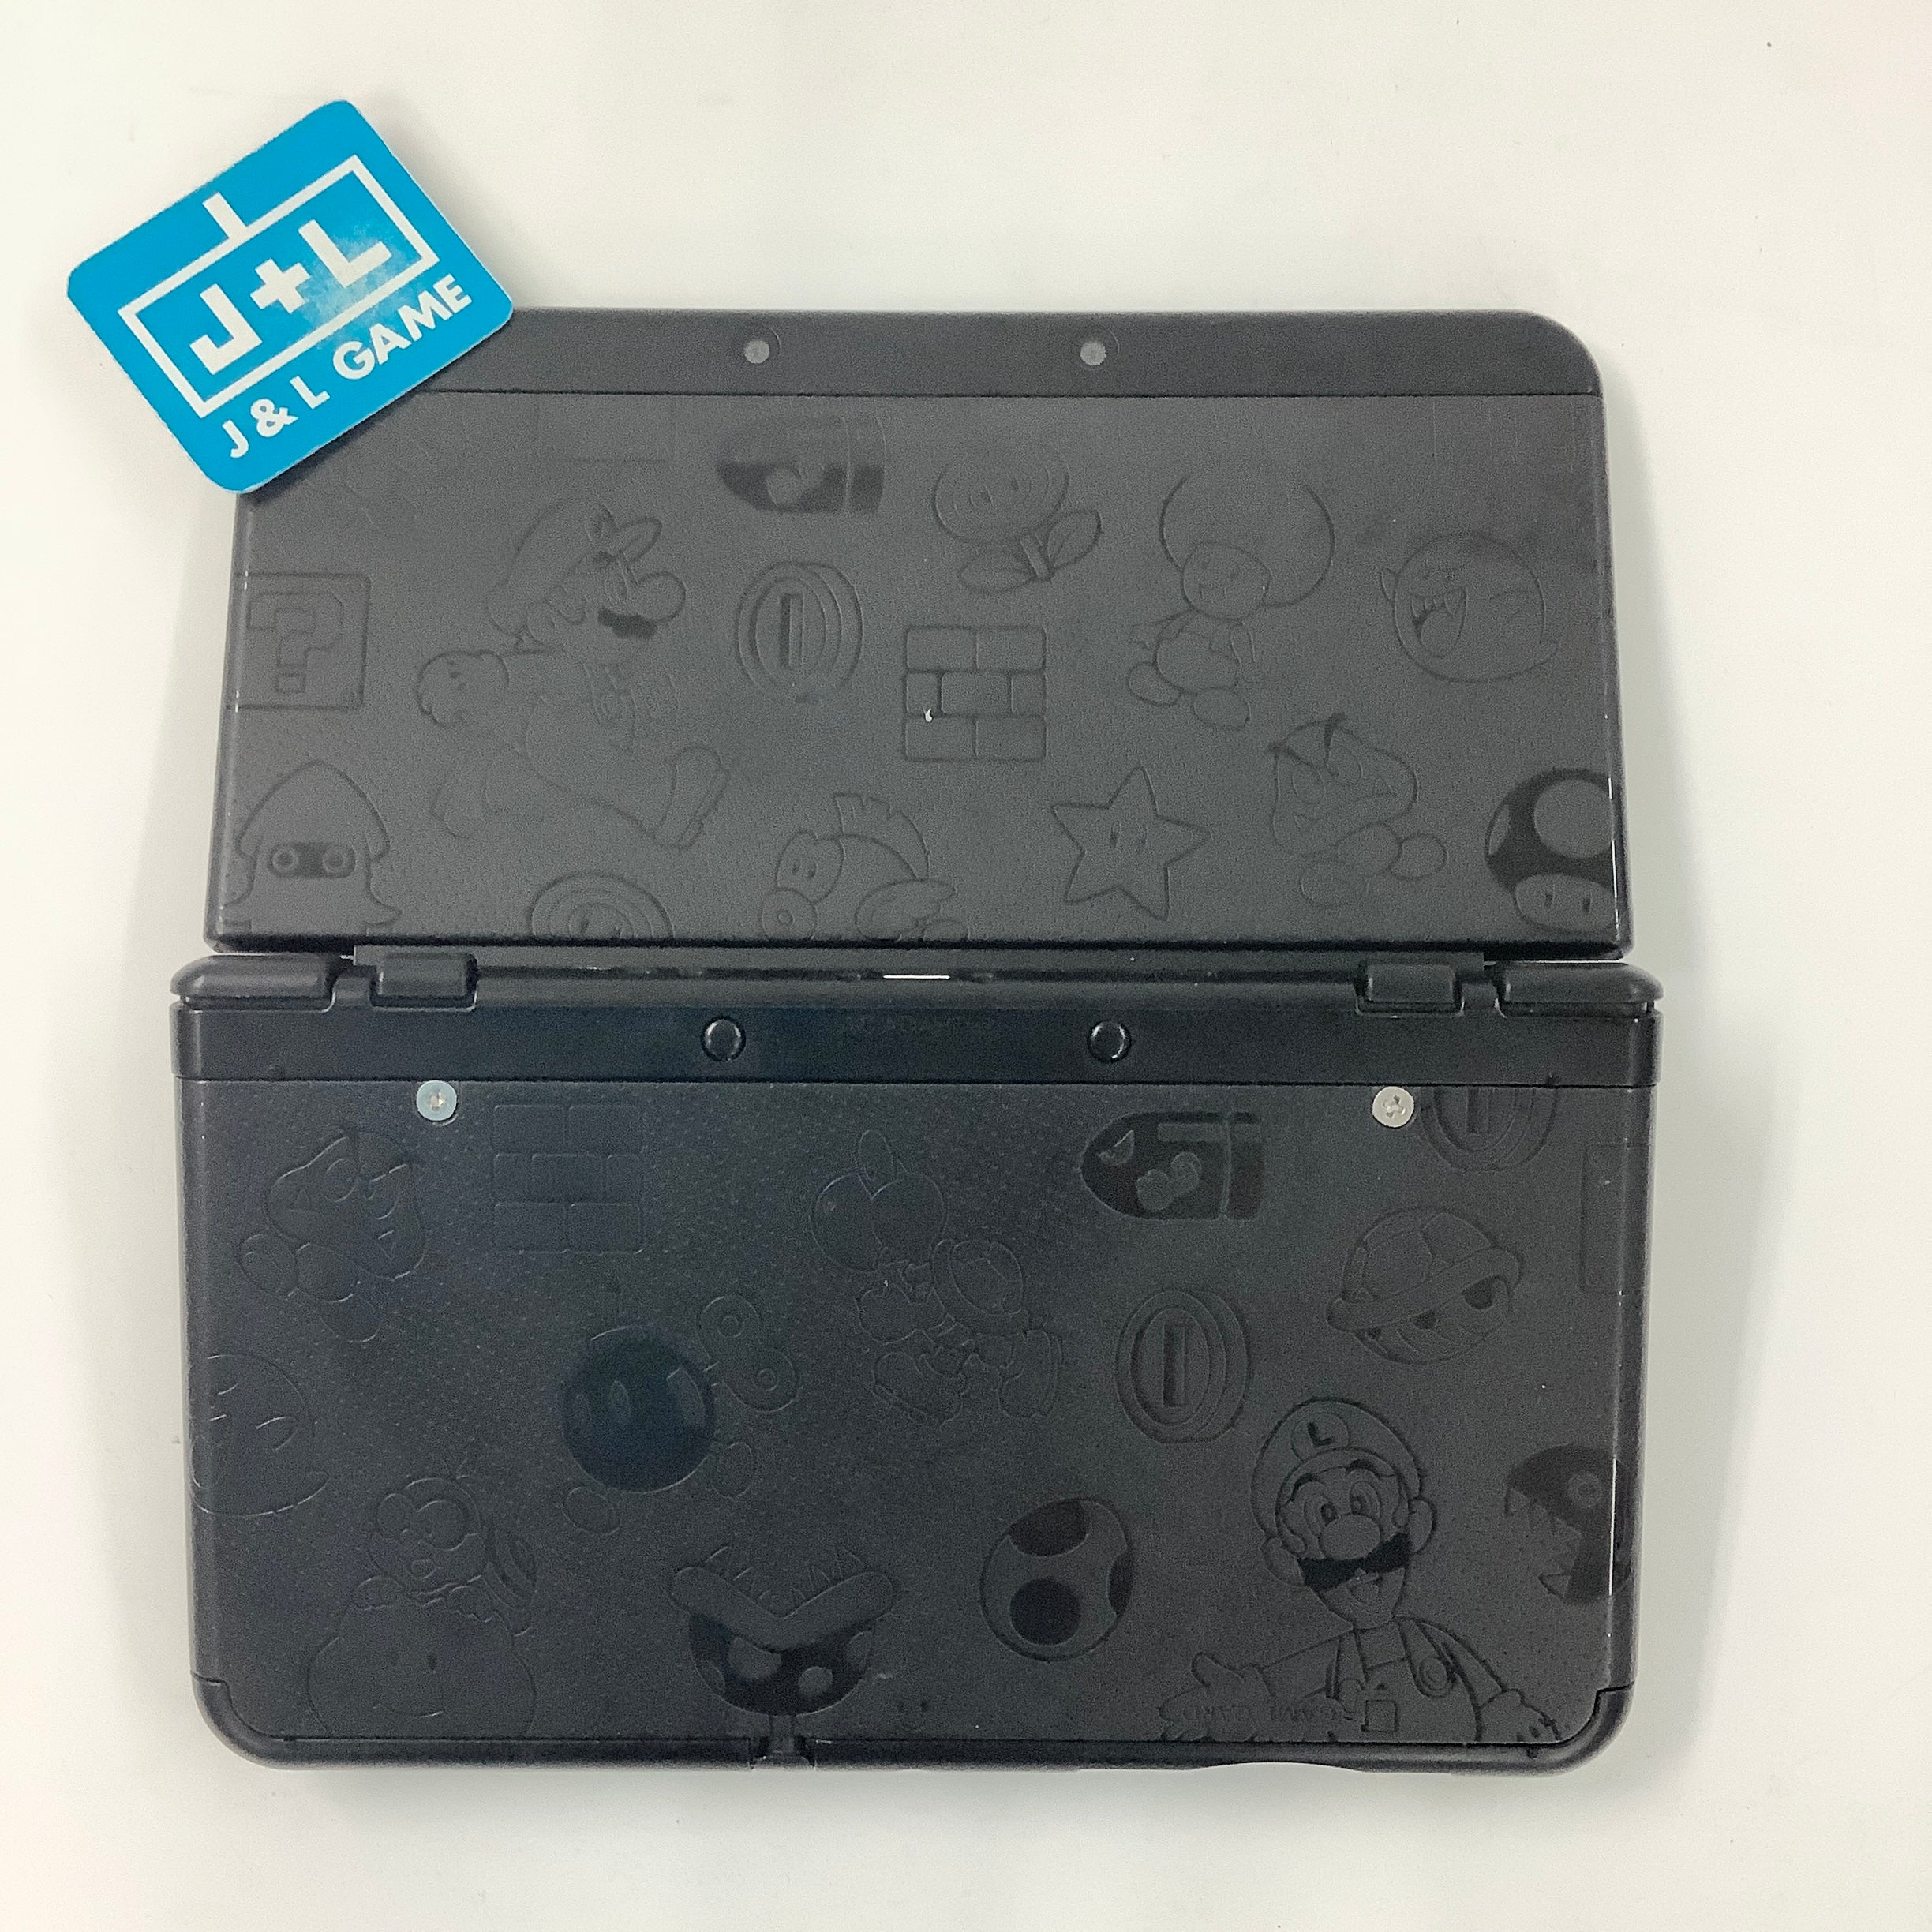 Nintendo New Nintendo 3DS (Super Mario Black Edition) - Nintendo 3DS [Pre-Owned] Consoles Nintendo   